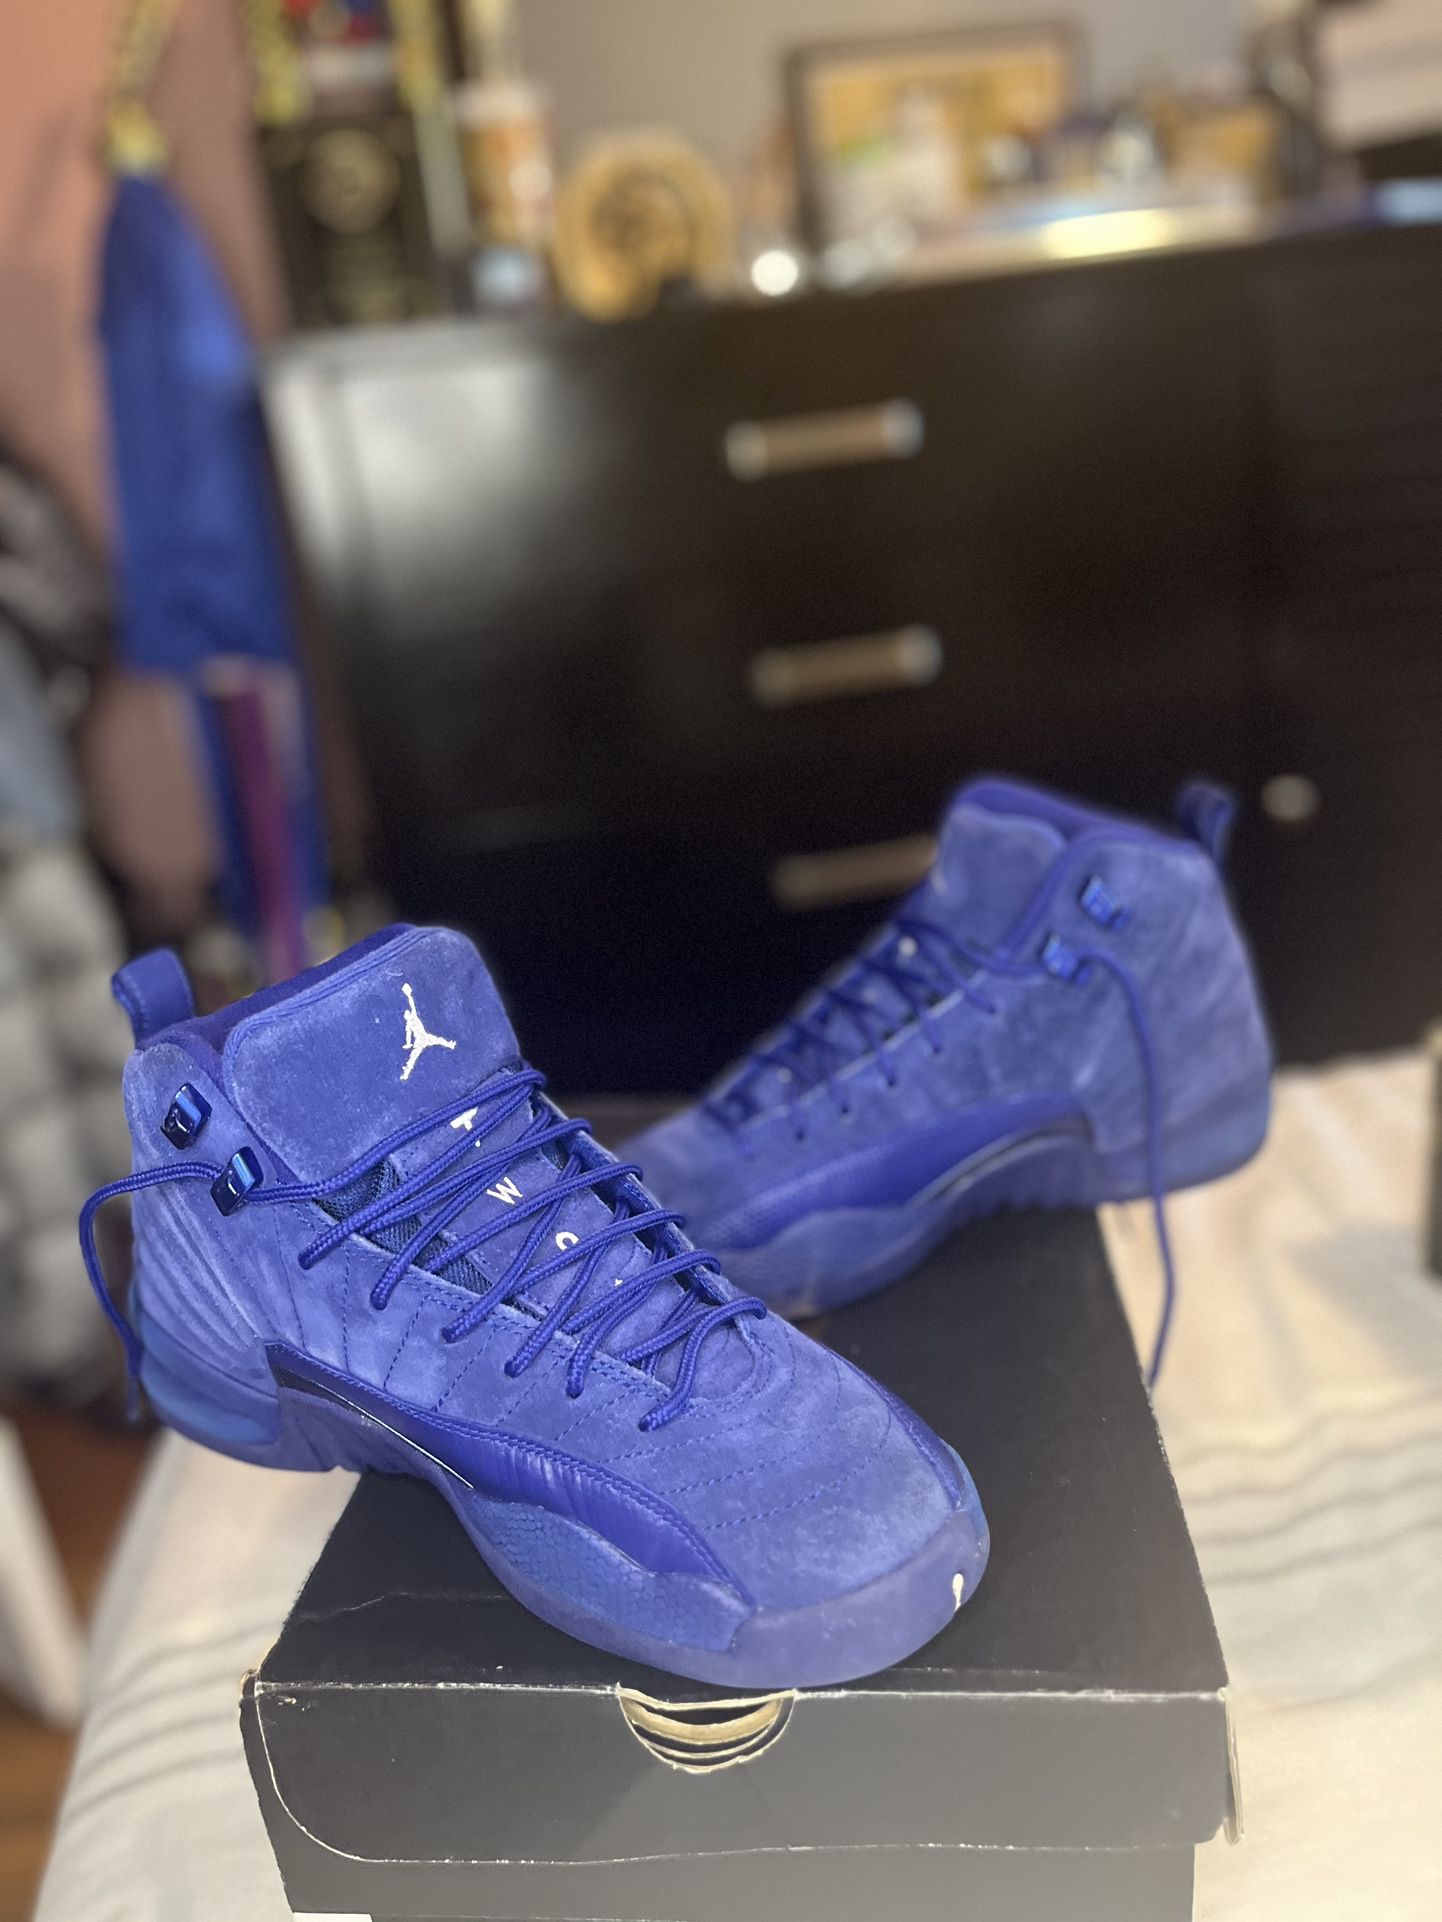 Blue Jordan 12s Size 6.5